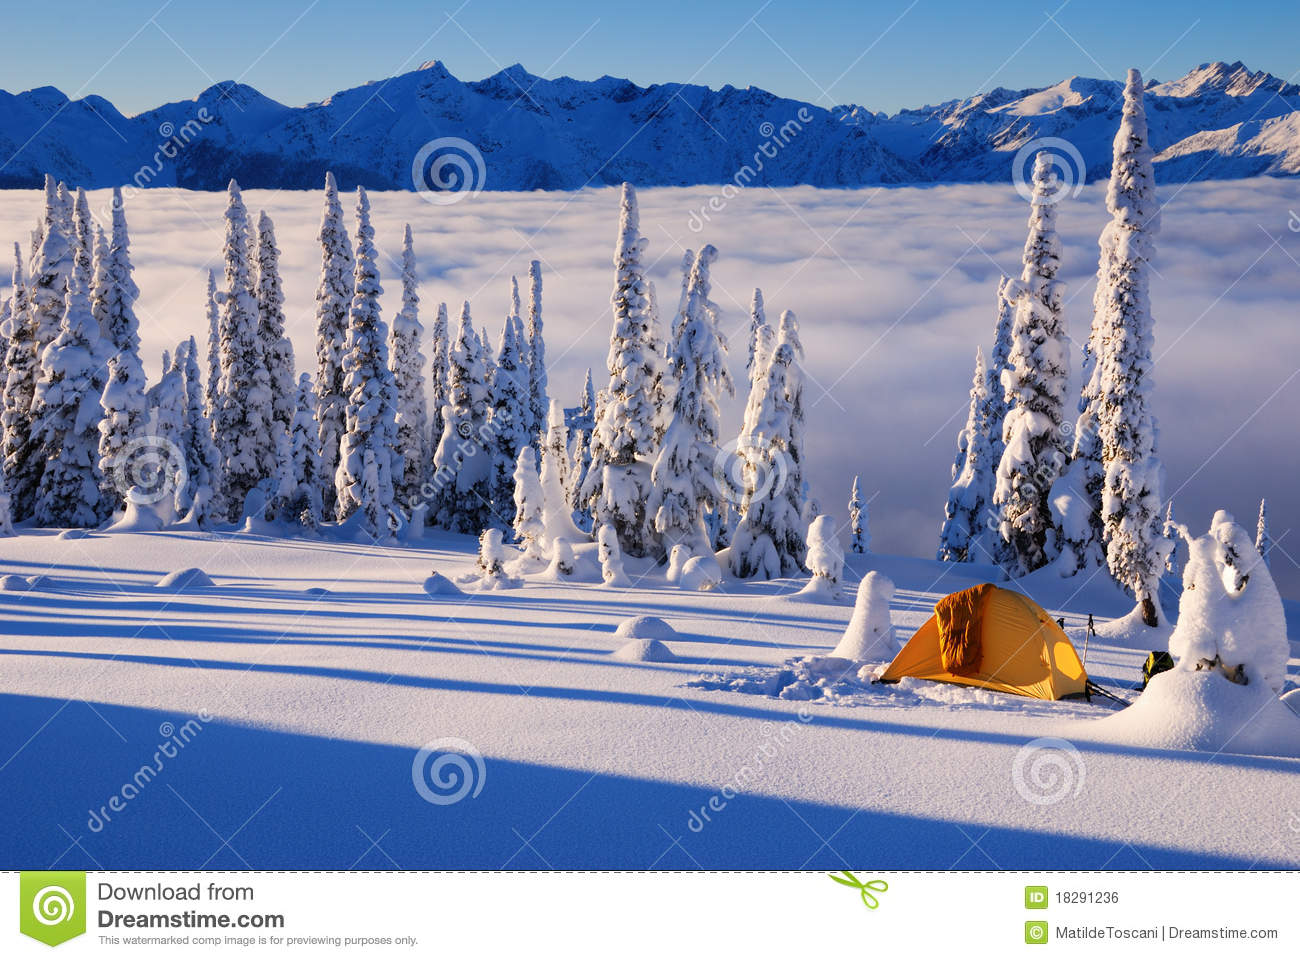 Winter Camping Royalty Free Stock Image   Image  18291236